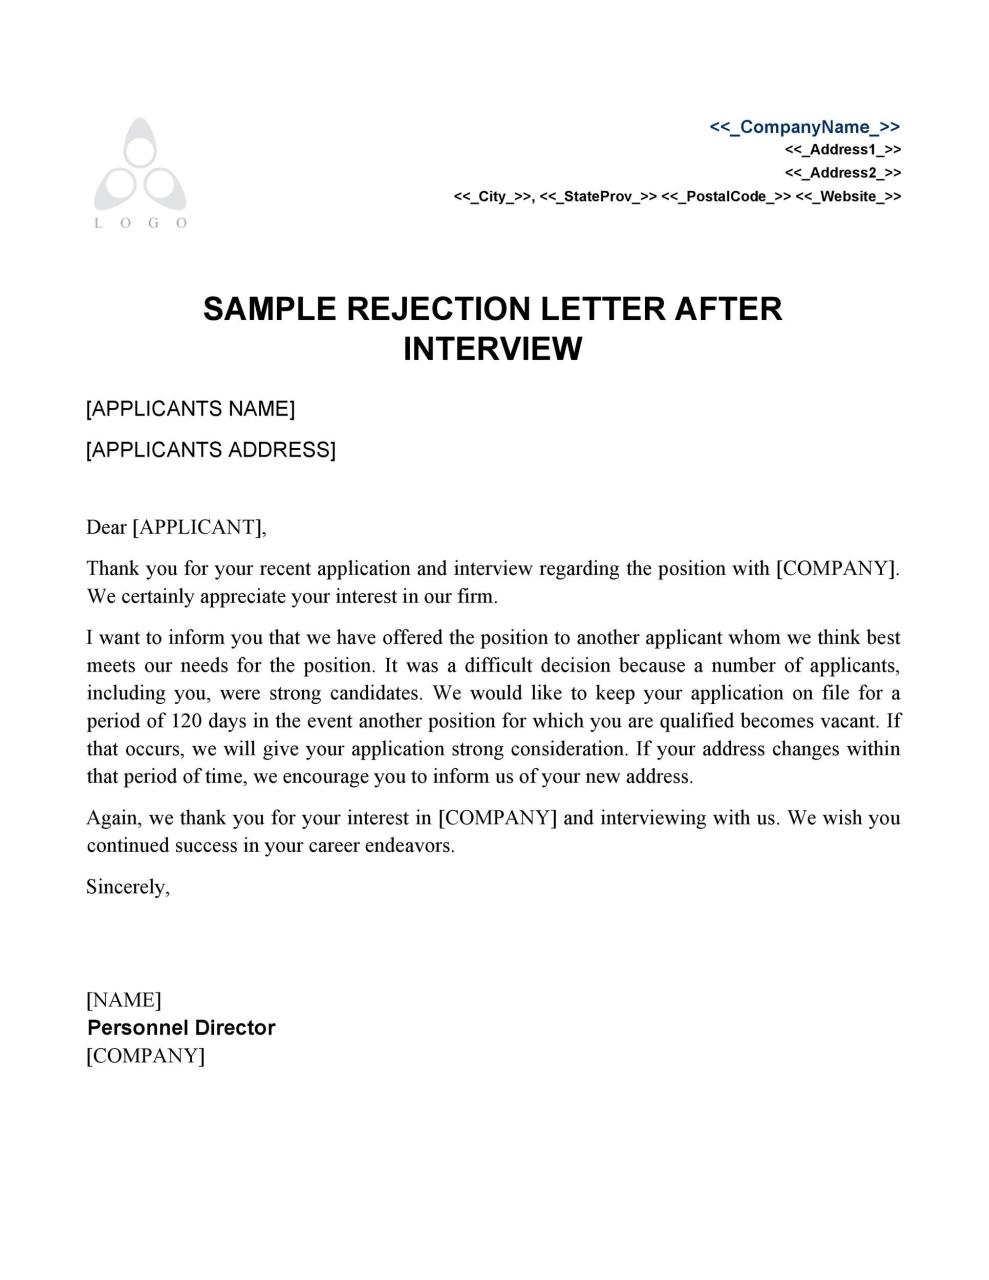 39 Job Rejection Letter Templates & Samples ᐅ TemplateLab